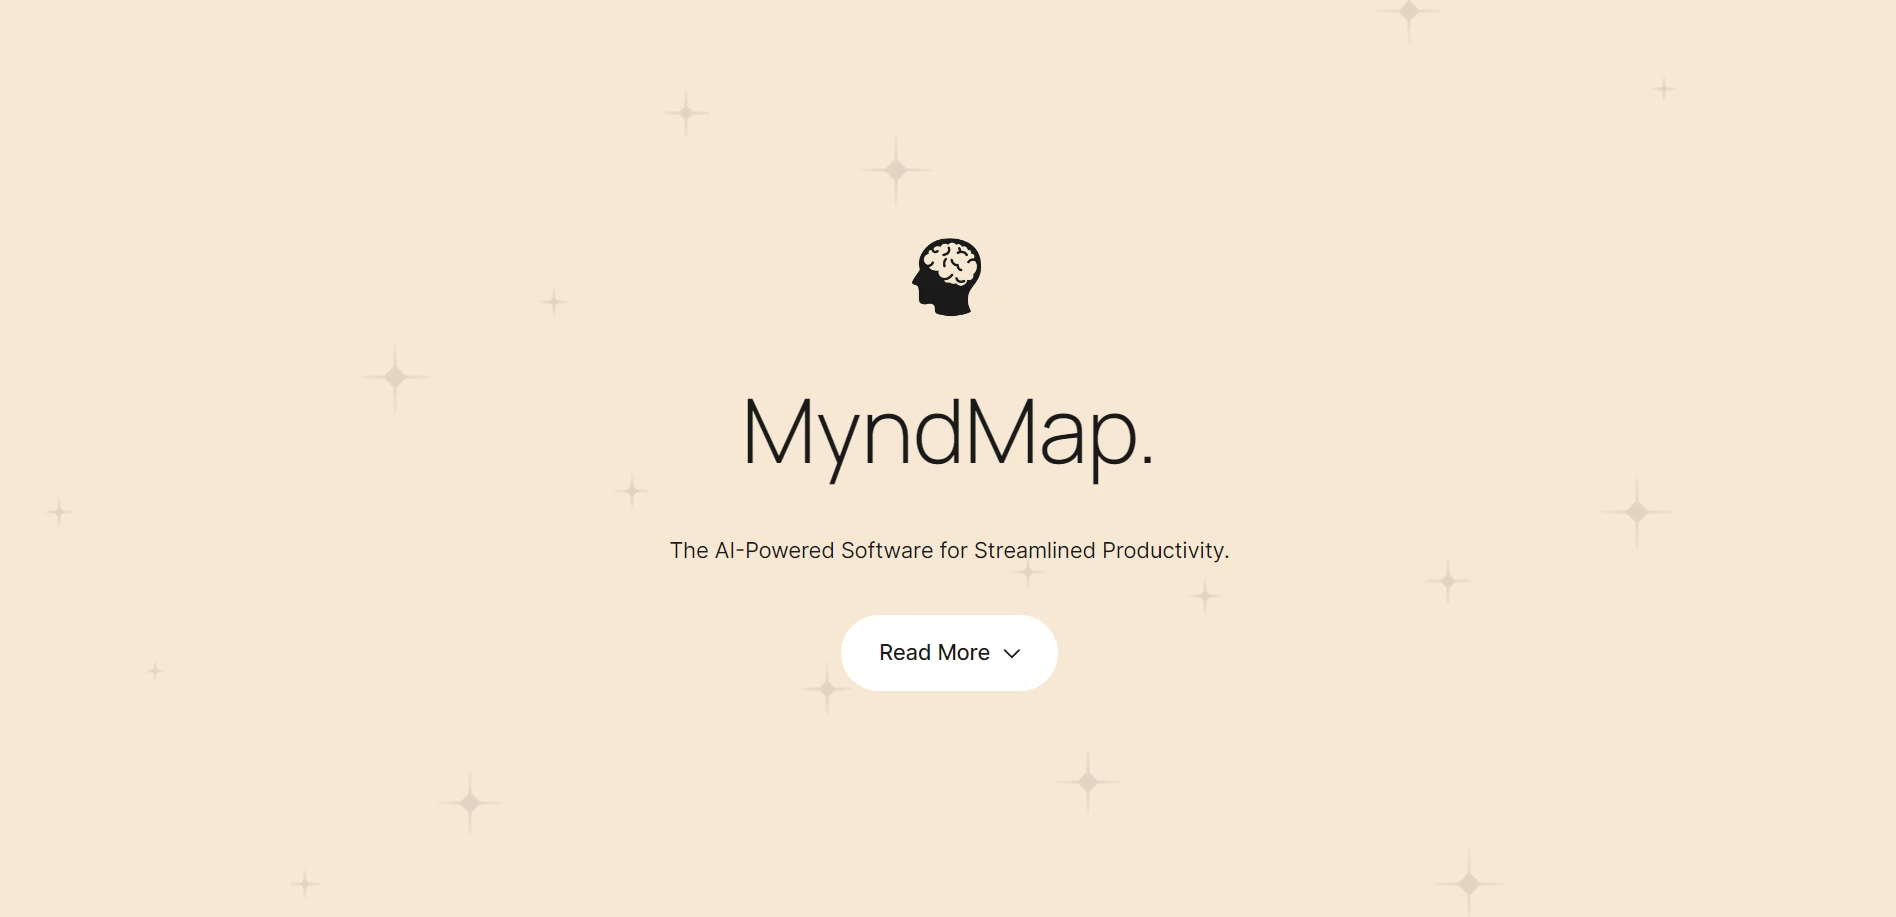 MyndMapwebsite picture